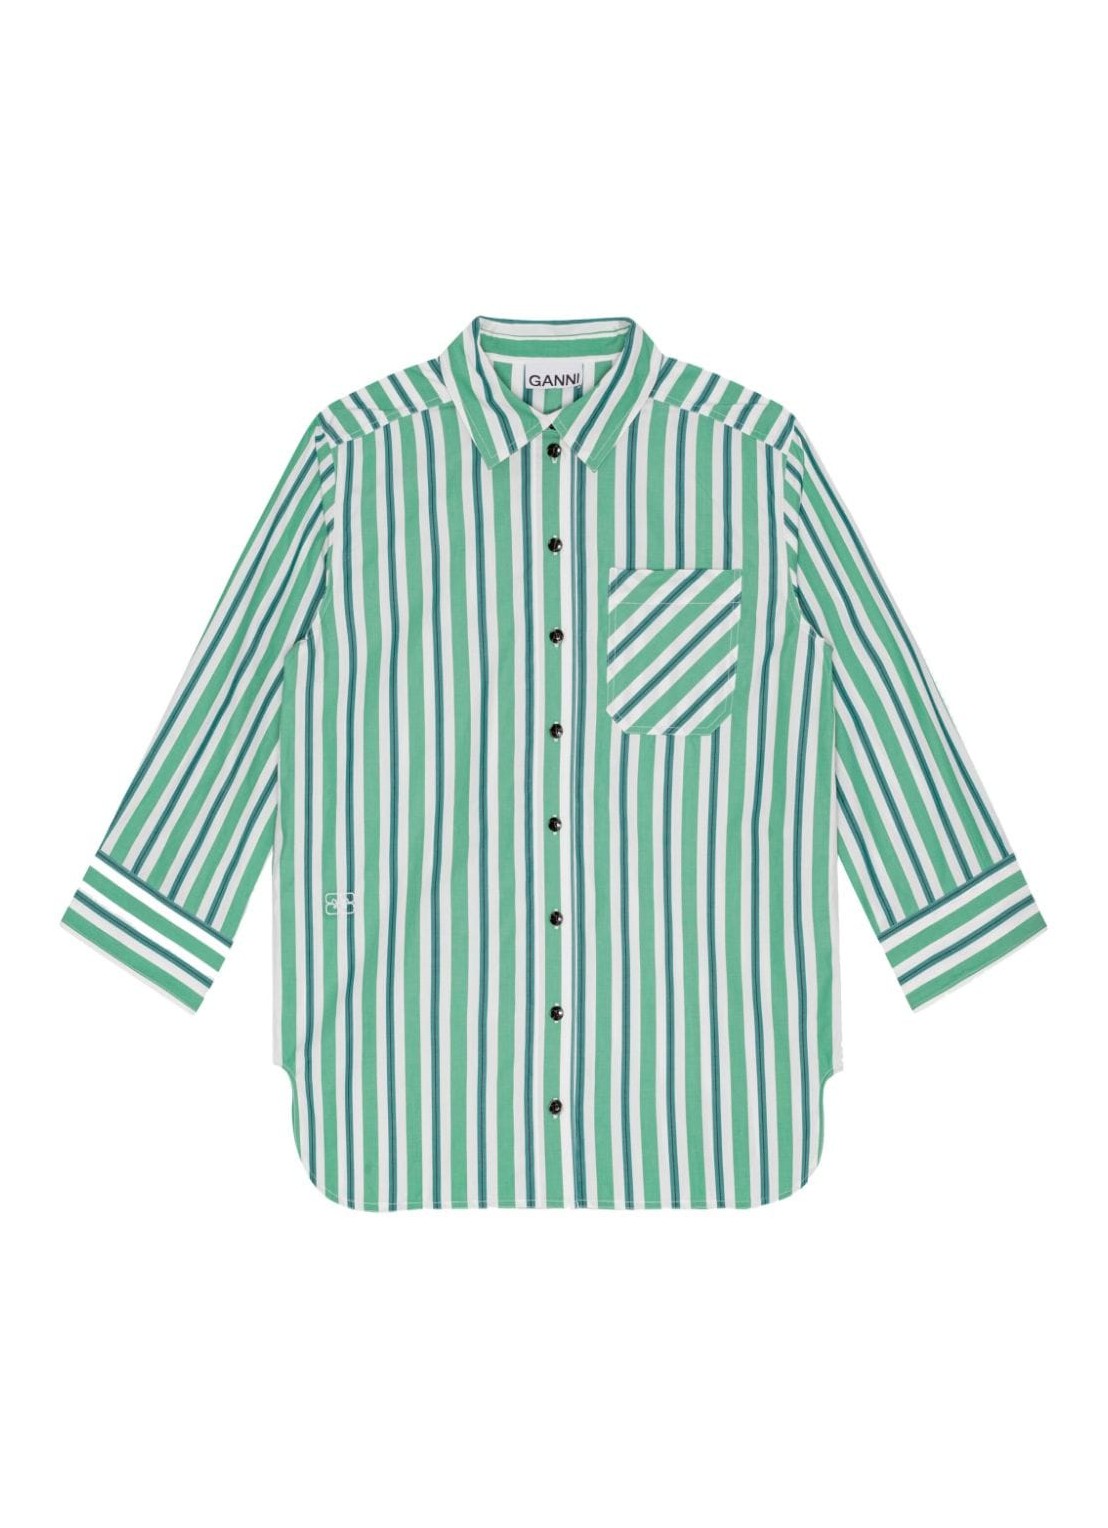 Camiseria ganni shirt woman stripe cotton shirt f9022 879 talla 36
 